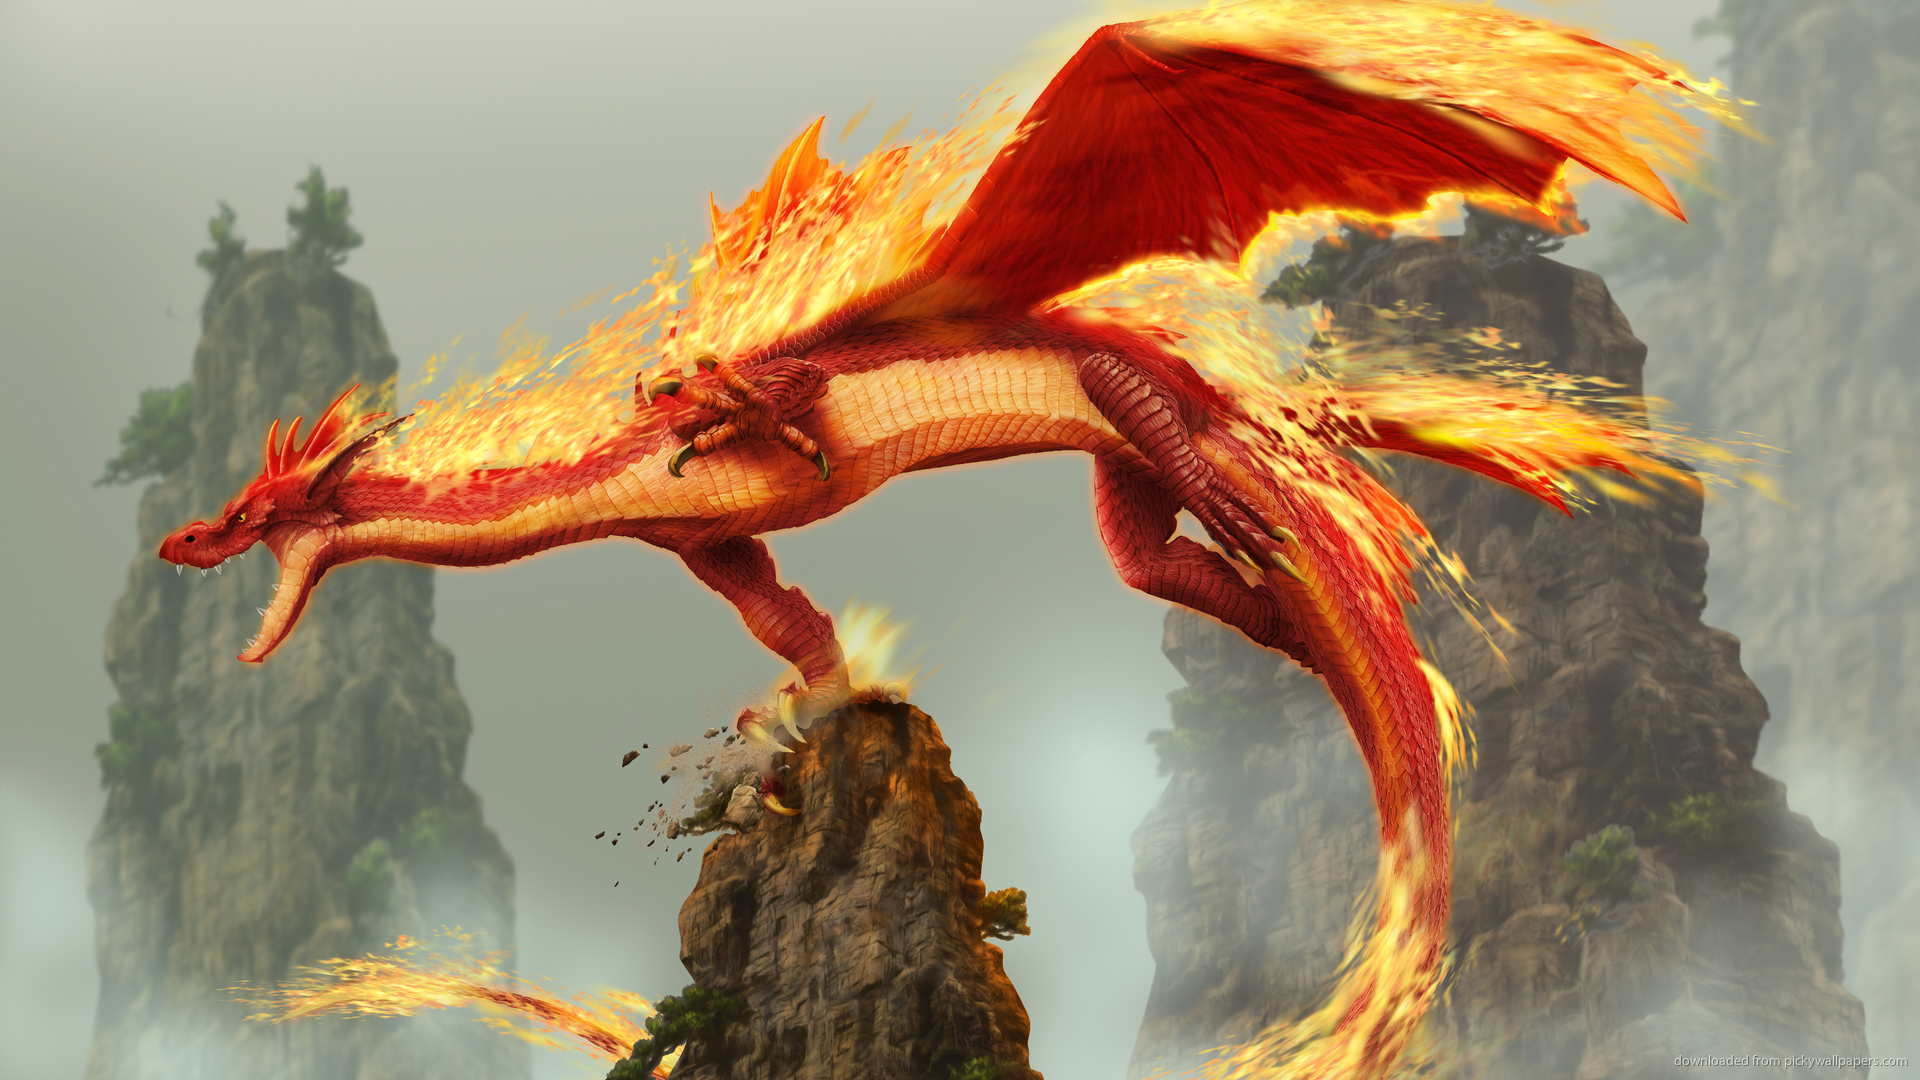 Fire Dragon Wallpaper - WallpaperSafari